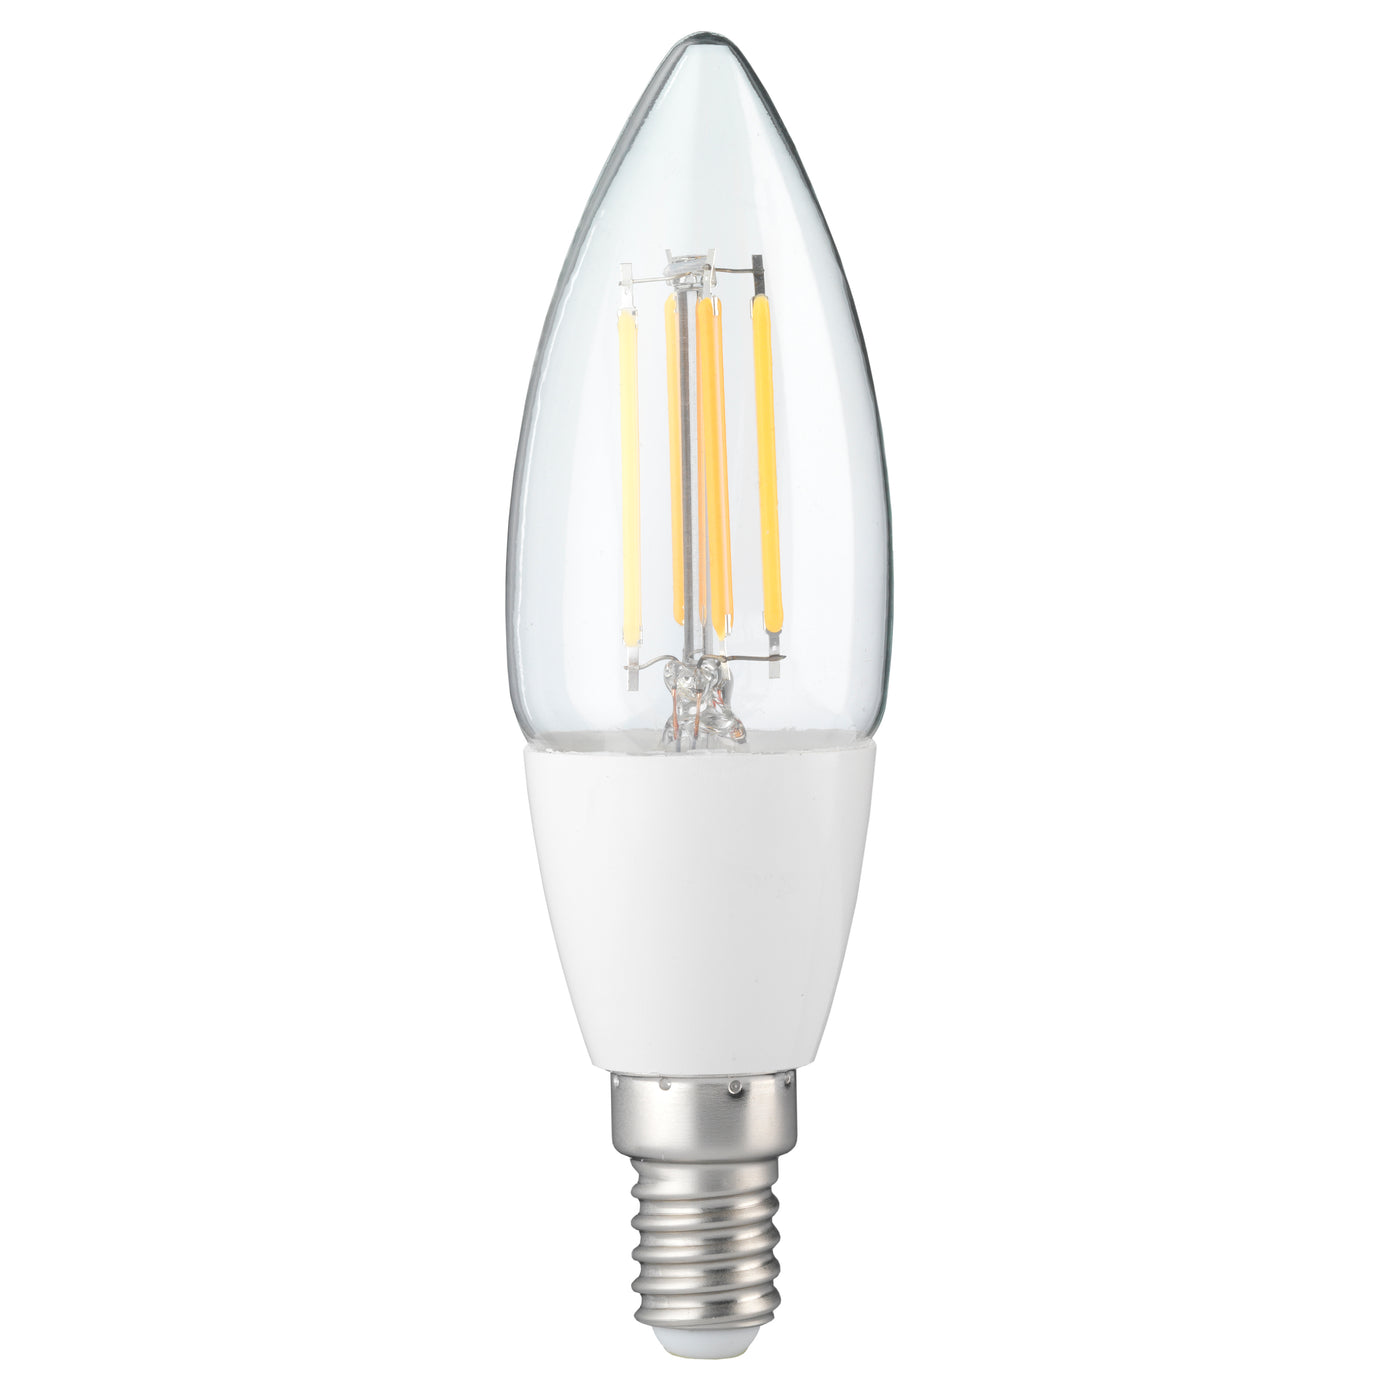 Alecto SMARTLIGHT130 - Lampe LED à filament intelligent avec Wi-Fi